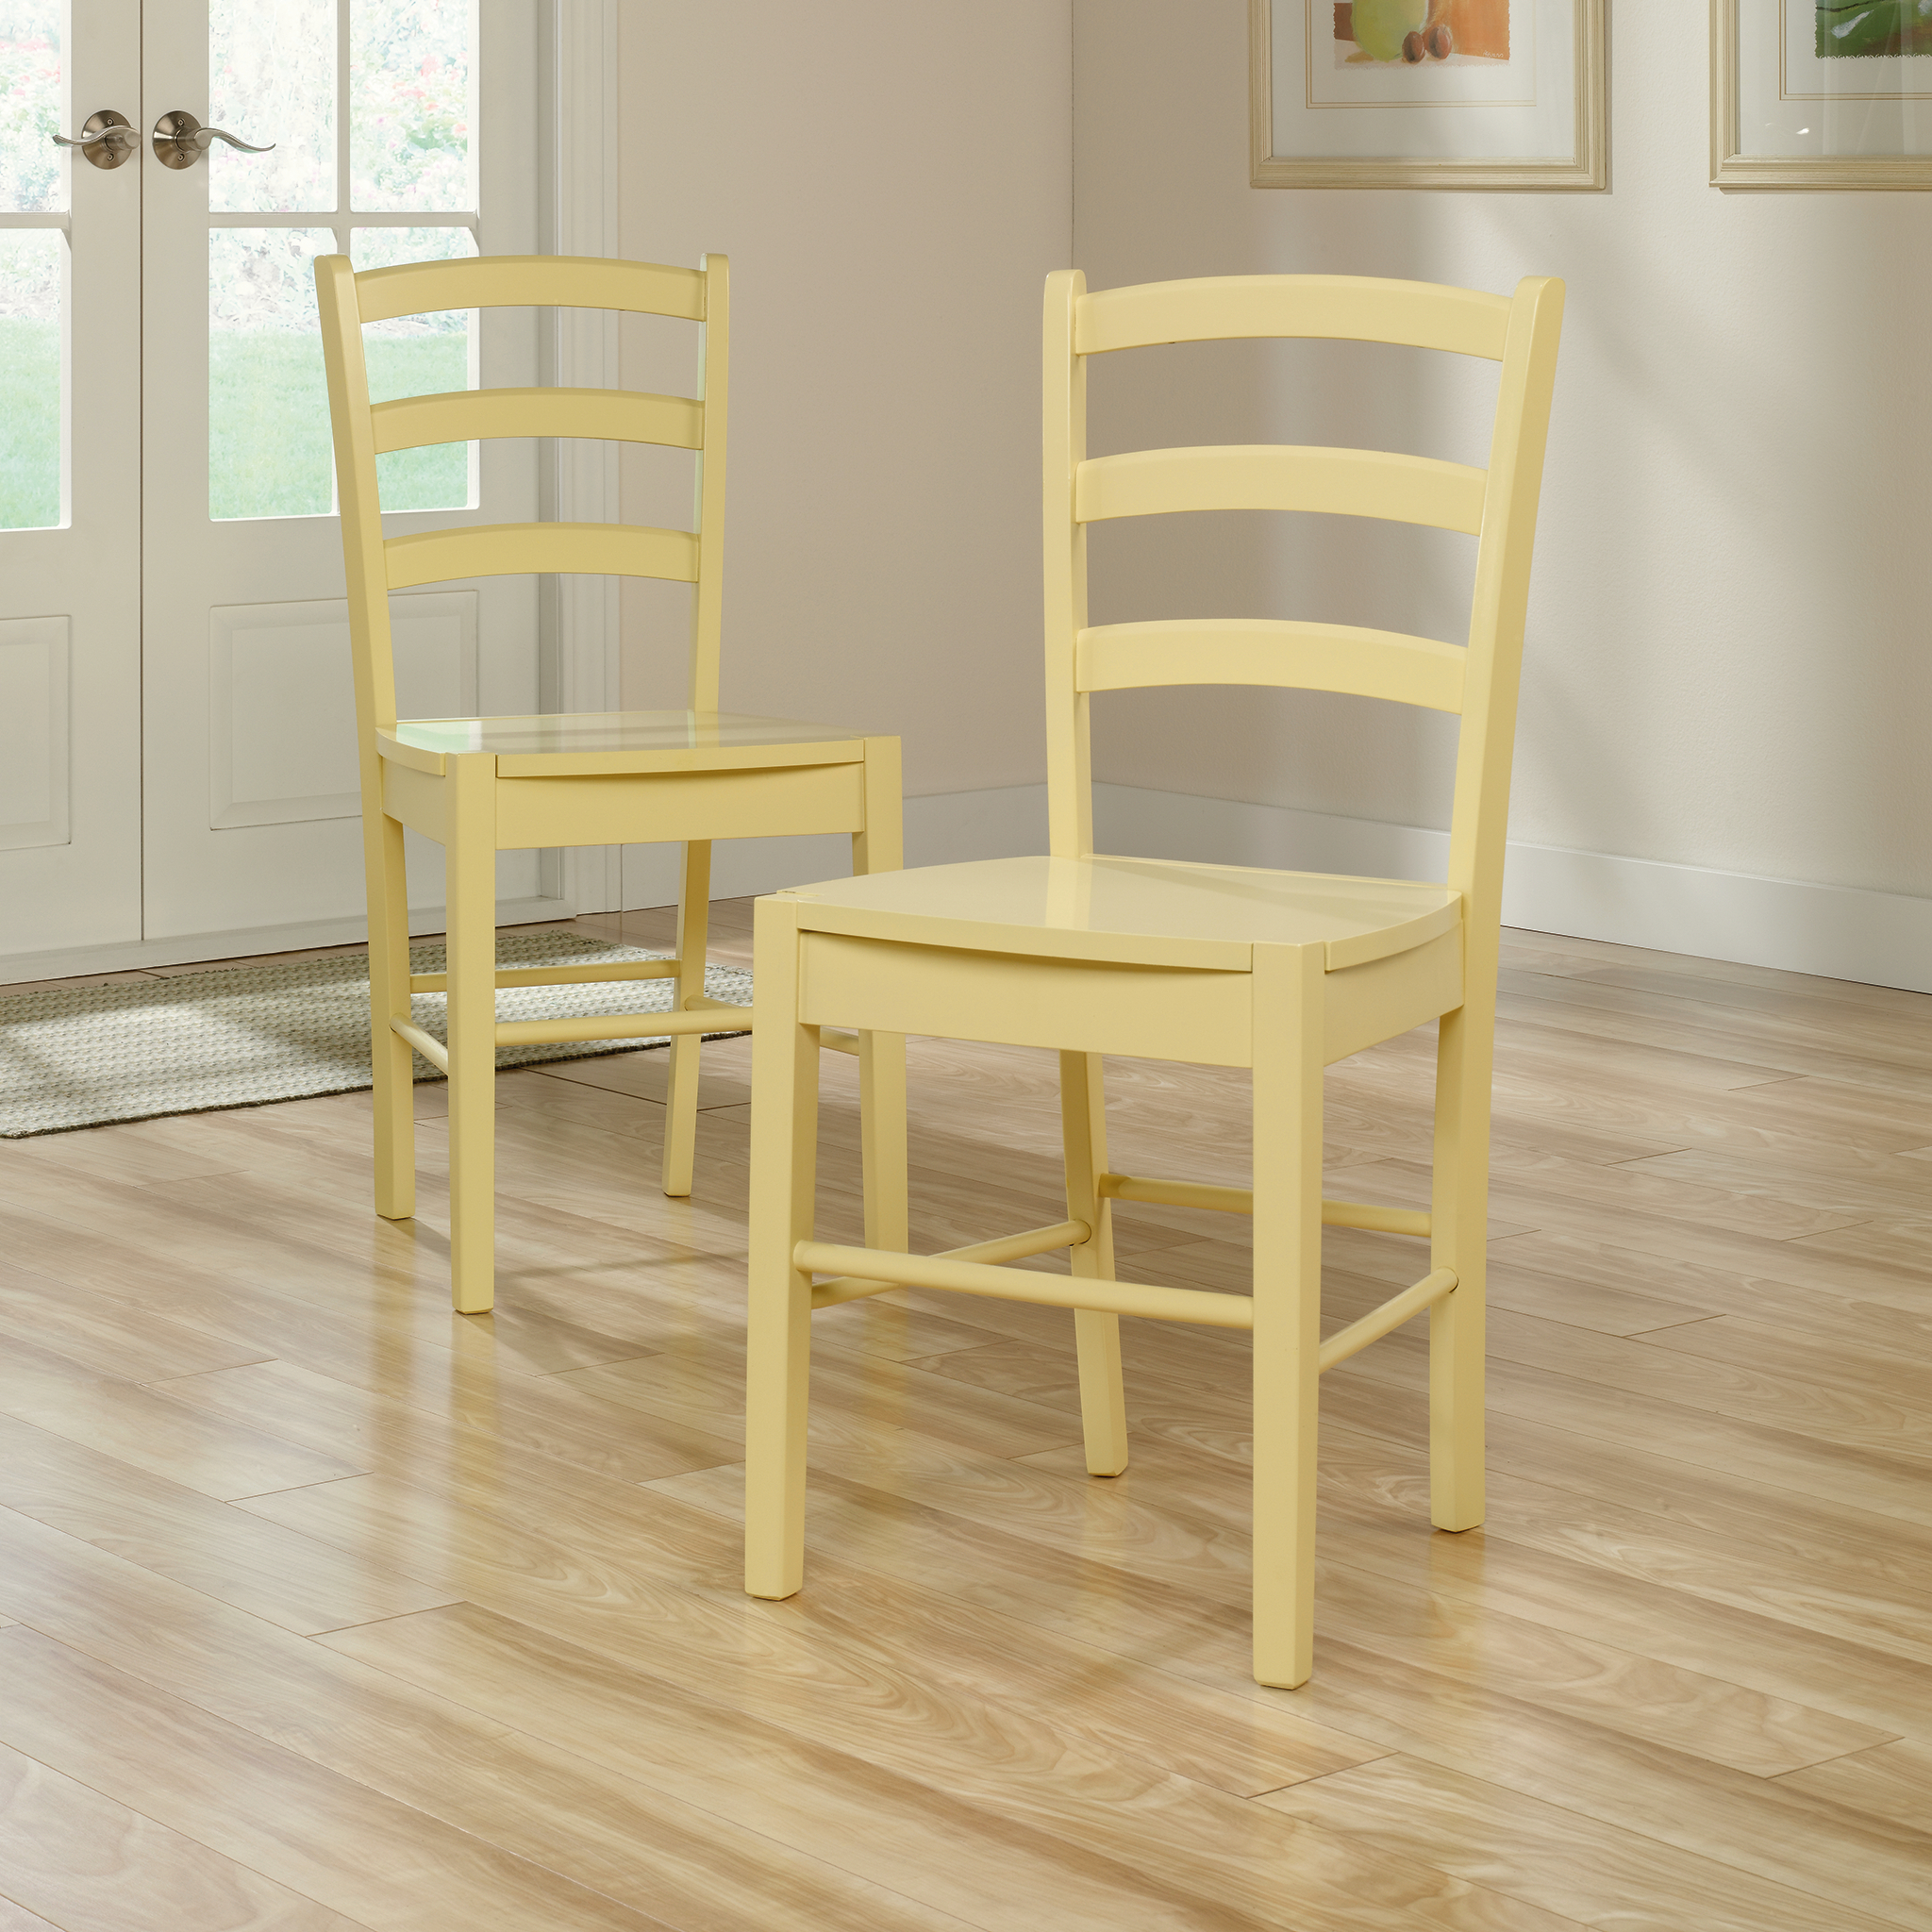 Original Cottage Ladder Back Chair Set of 2 - Mellon Yellow